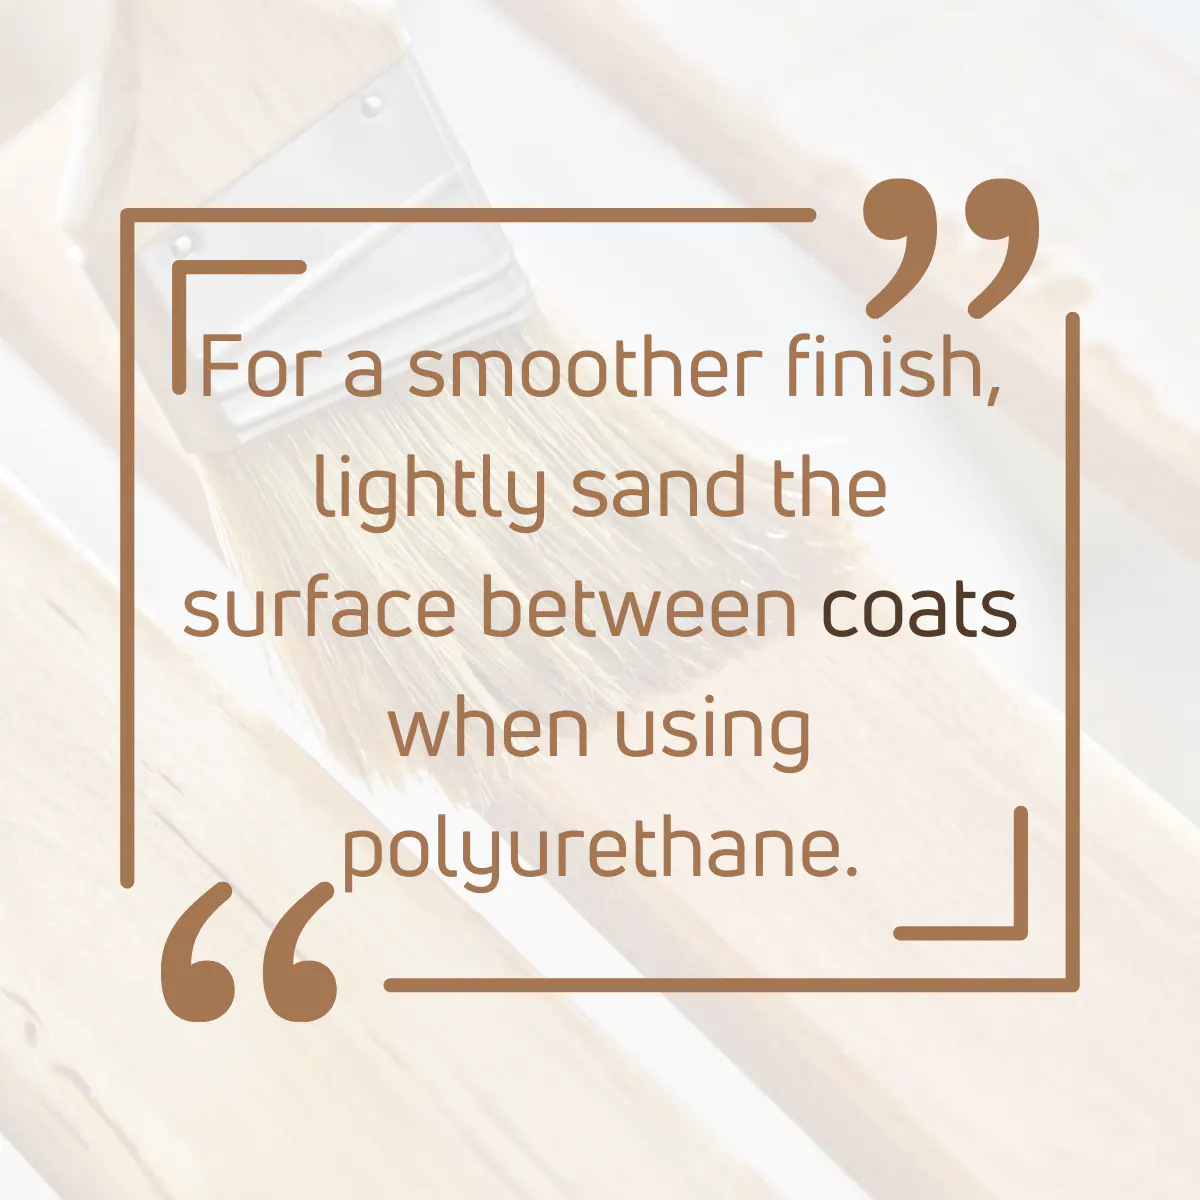 Tip for applying Polyurethane